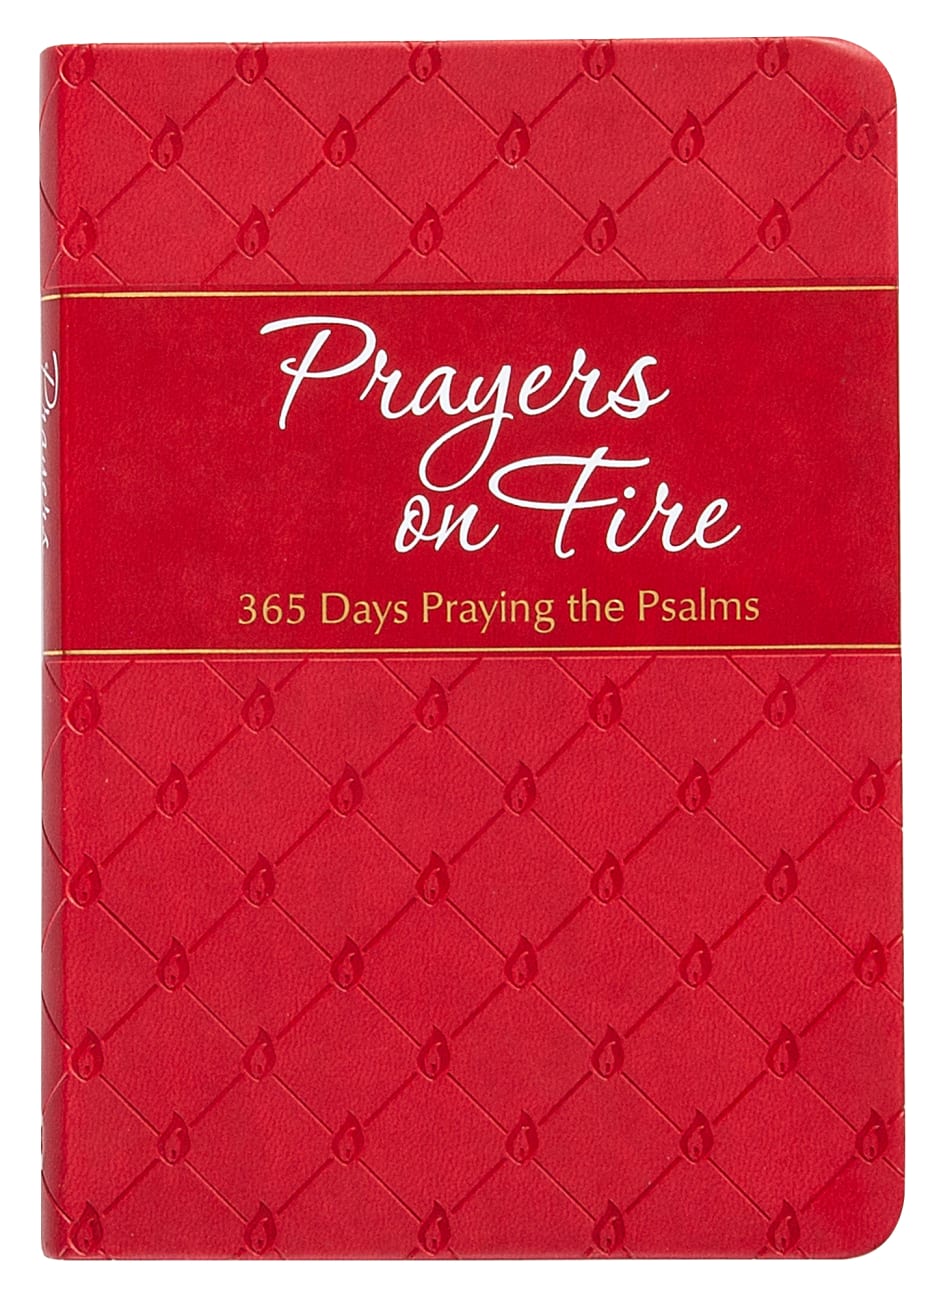 Prayers on Fire: 365 Days Praying the Psalms Imitation Leather